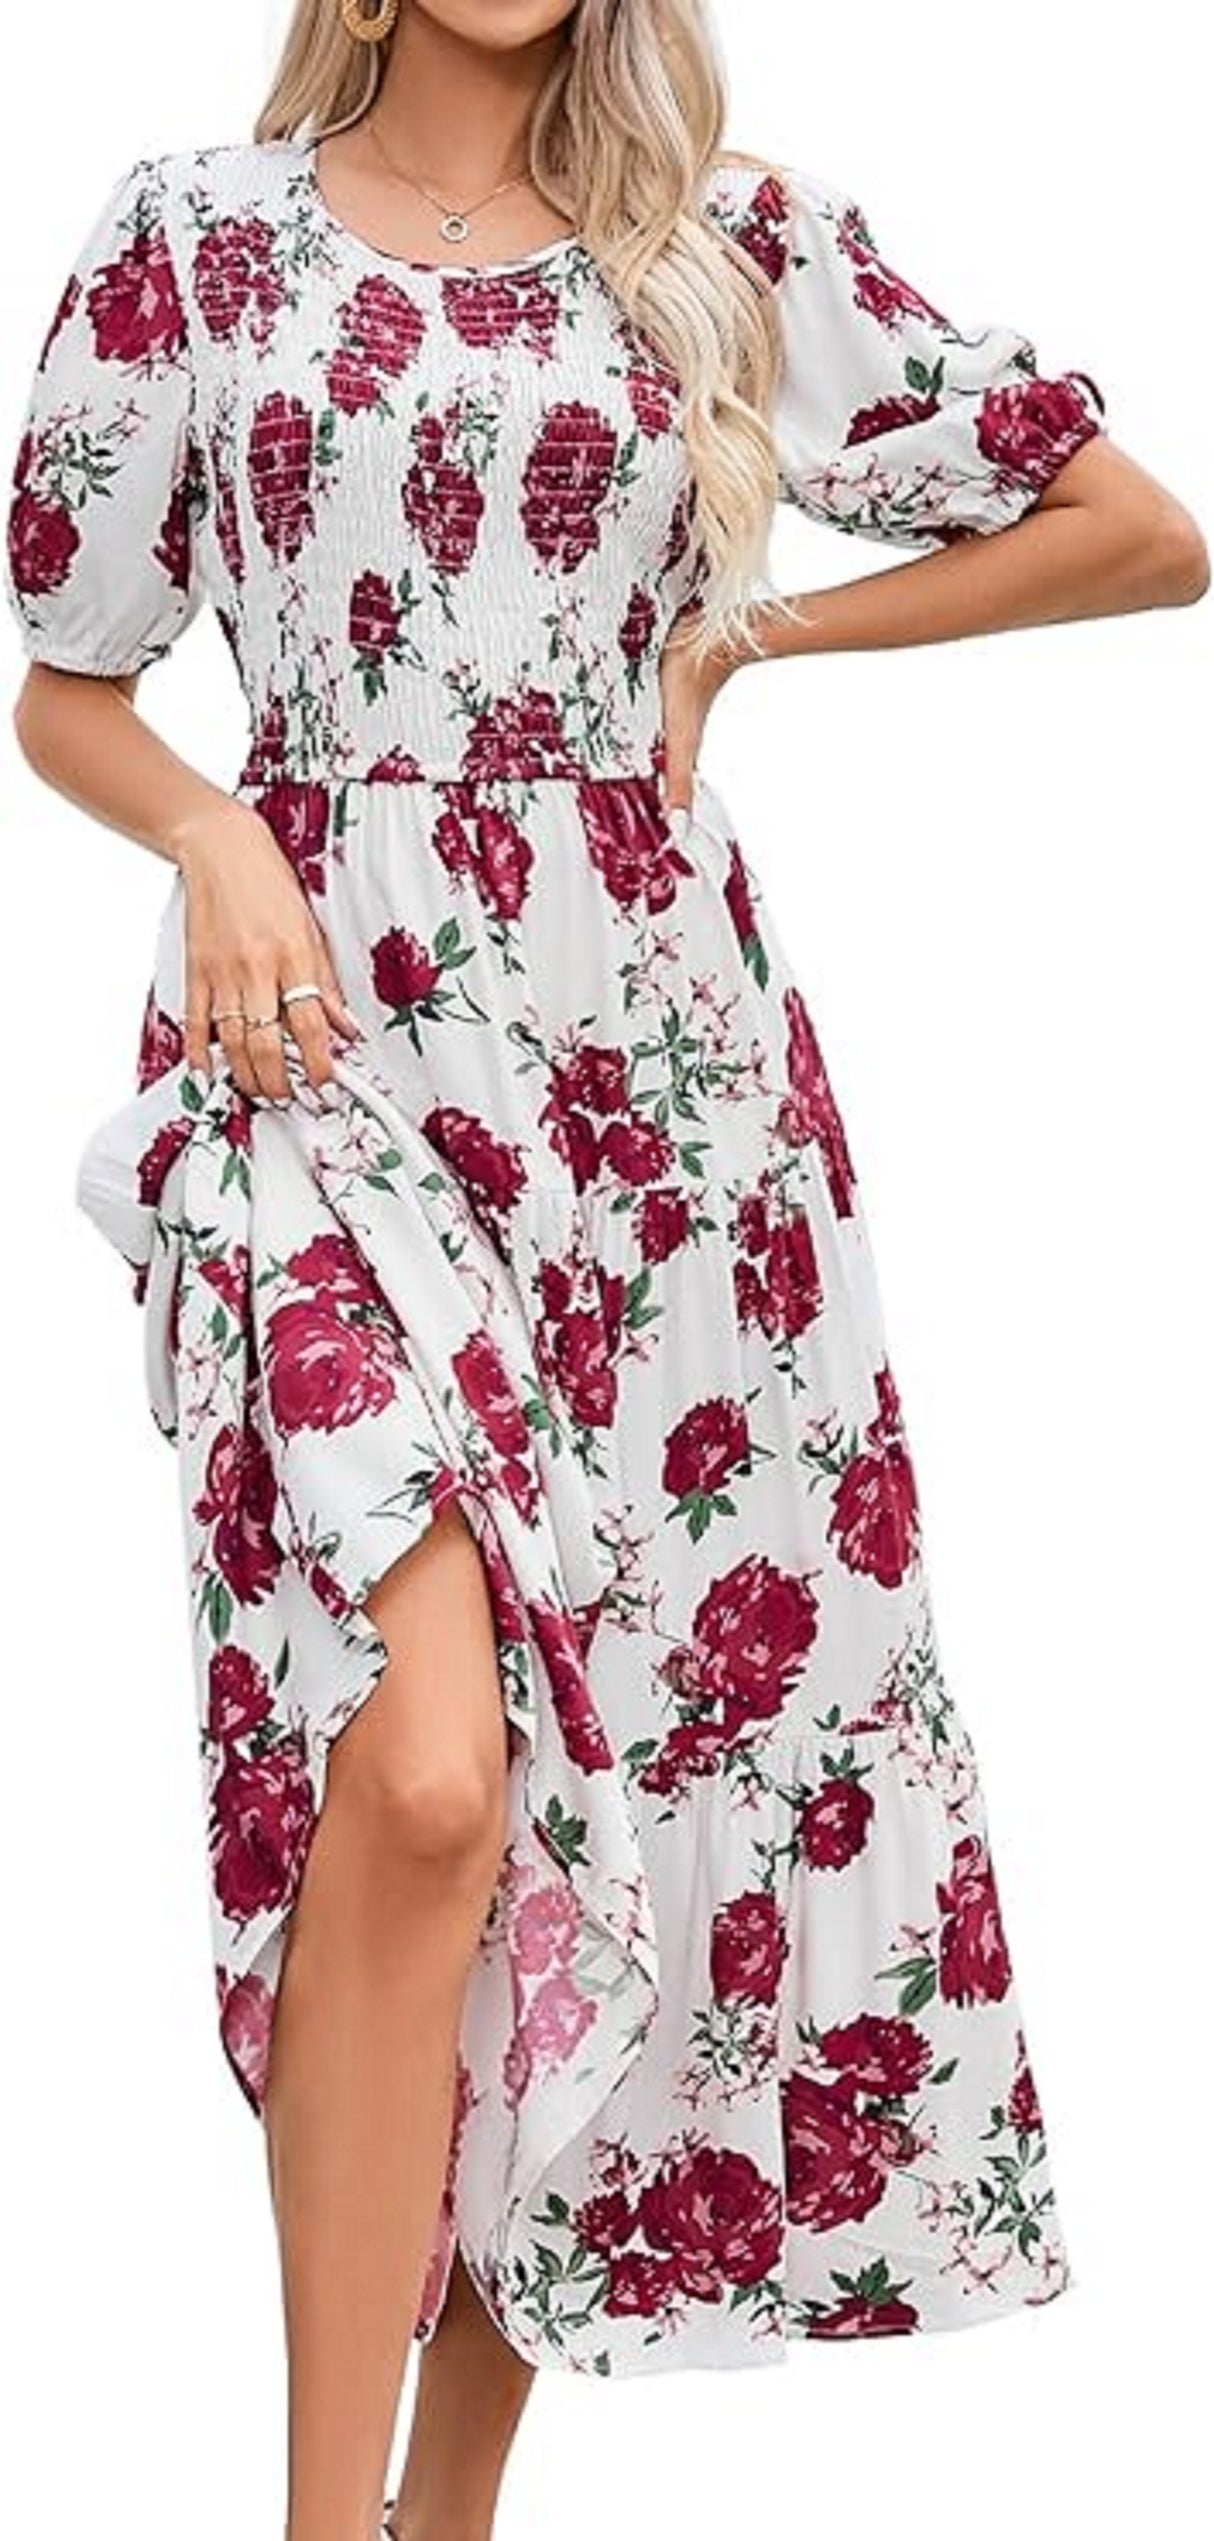 Chic Bohemian Ruffle Midi Women's Dress - Floral Elegance, Puff Sleeves, Summer Perfection